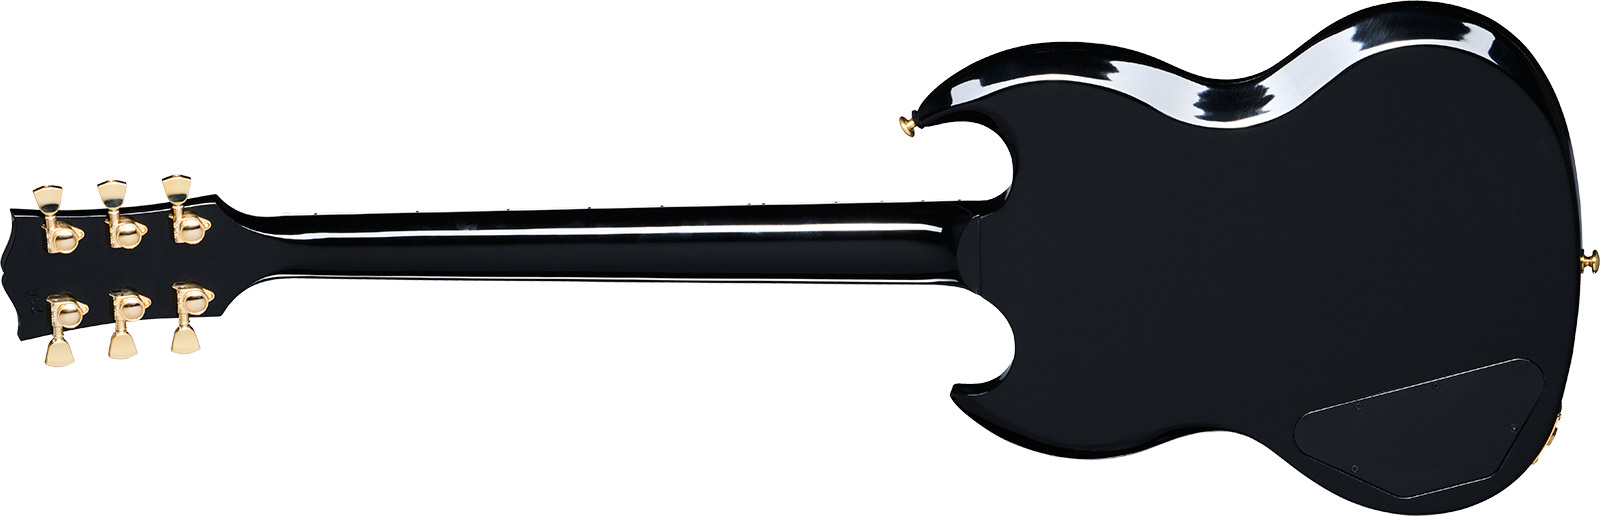 Gibson Sg Supreme Usa 2h Ht Rw - Translucent Ebony Burst - Double cut electric guitar - Variation 1